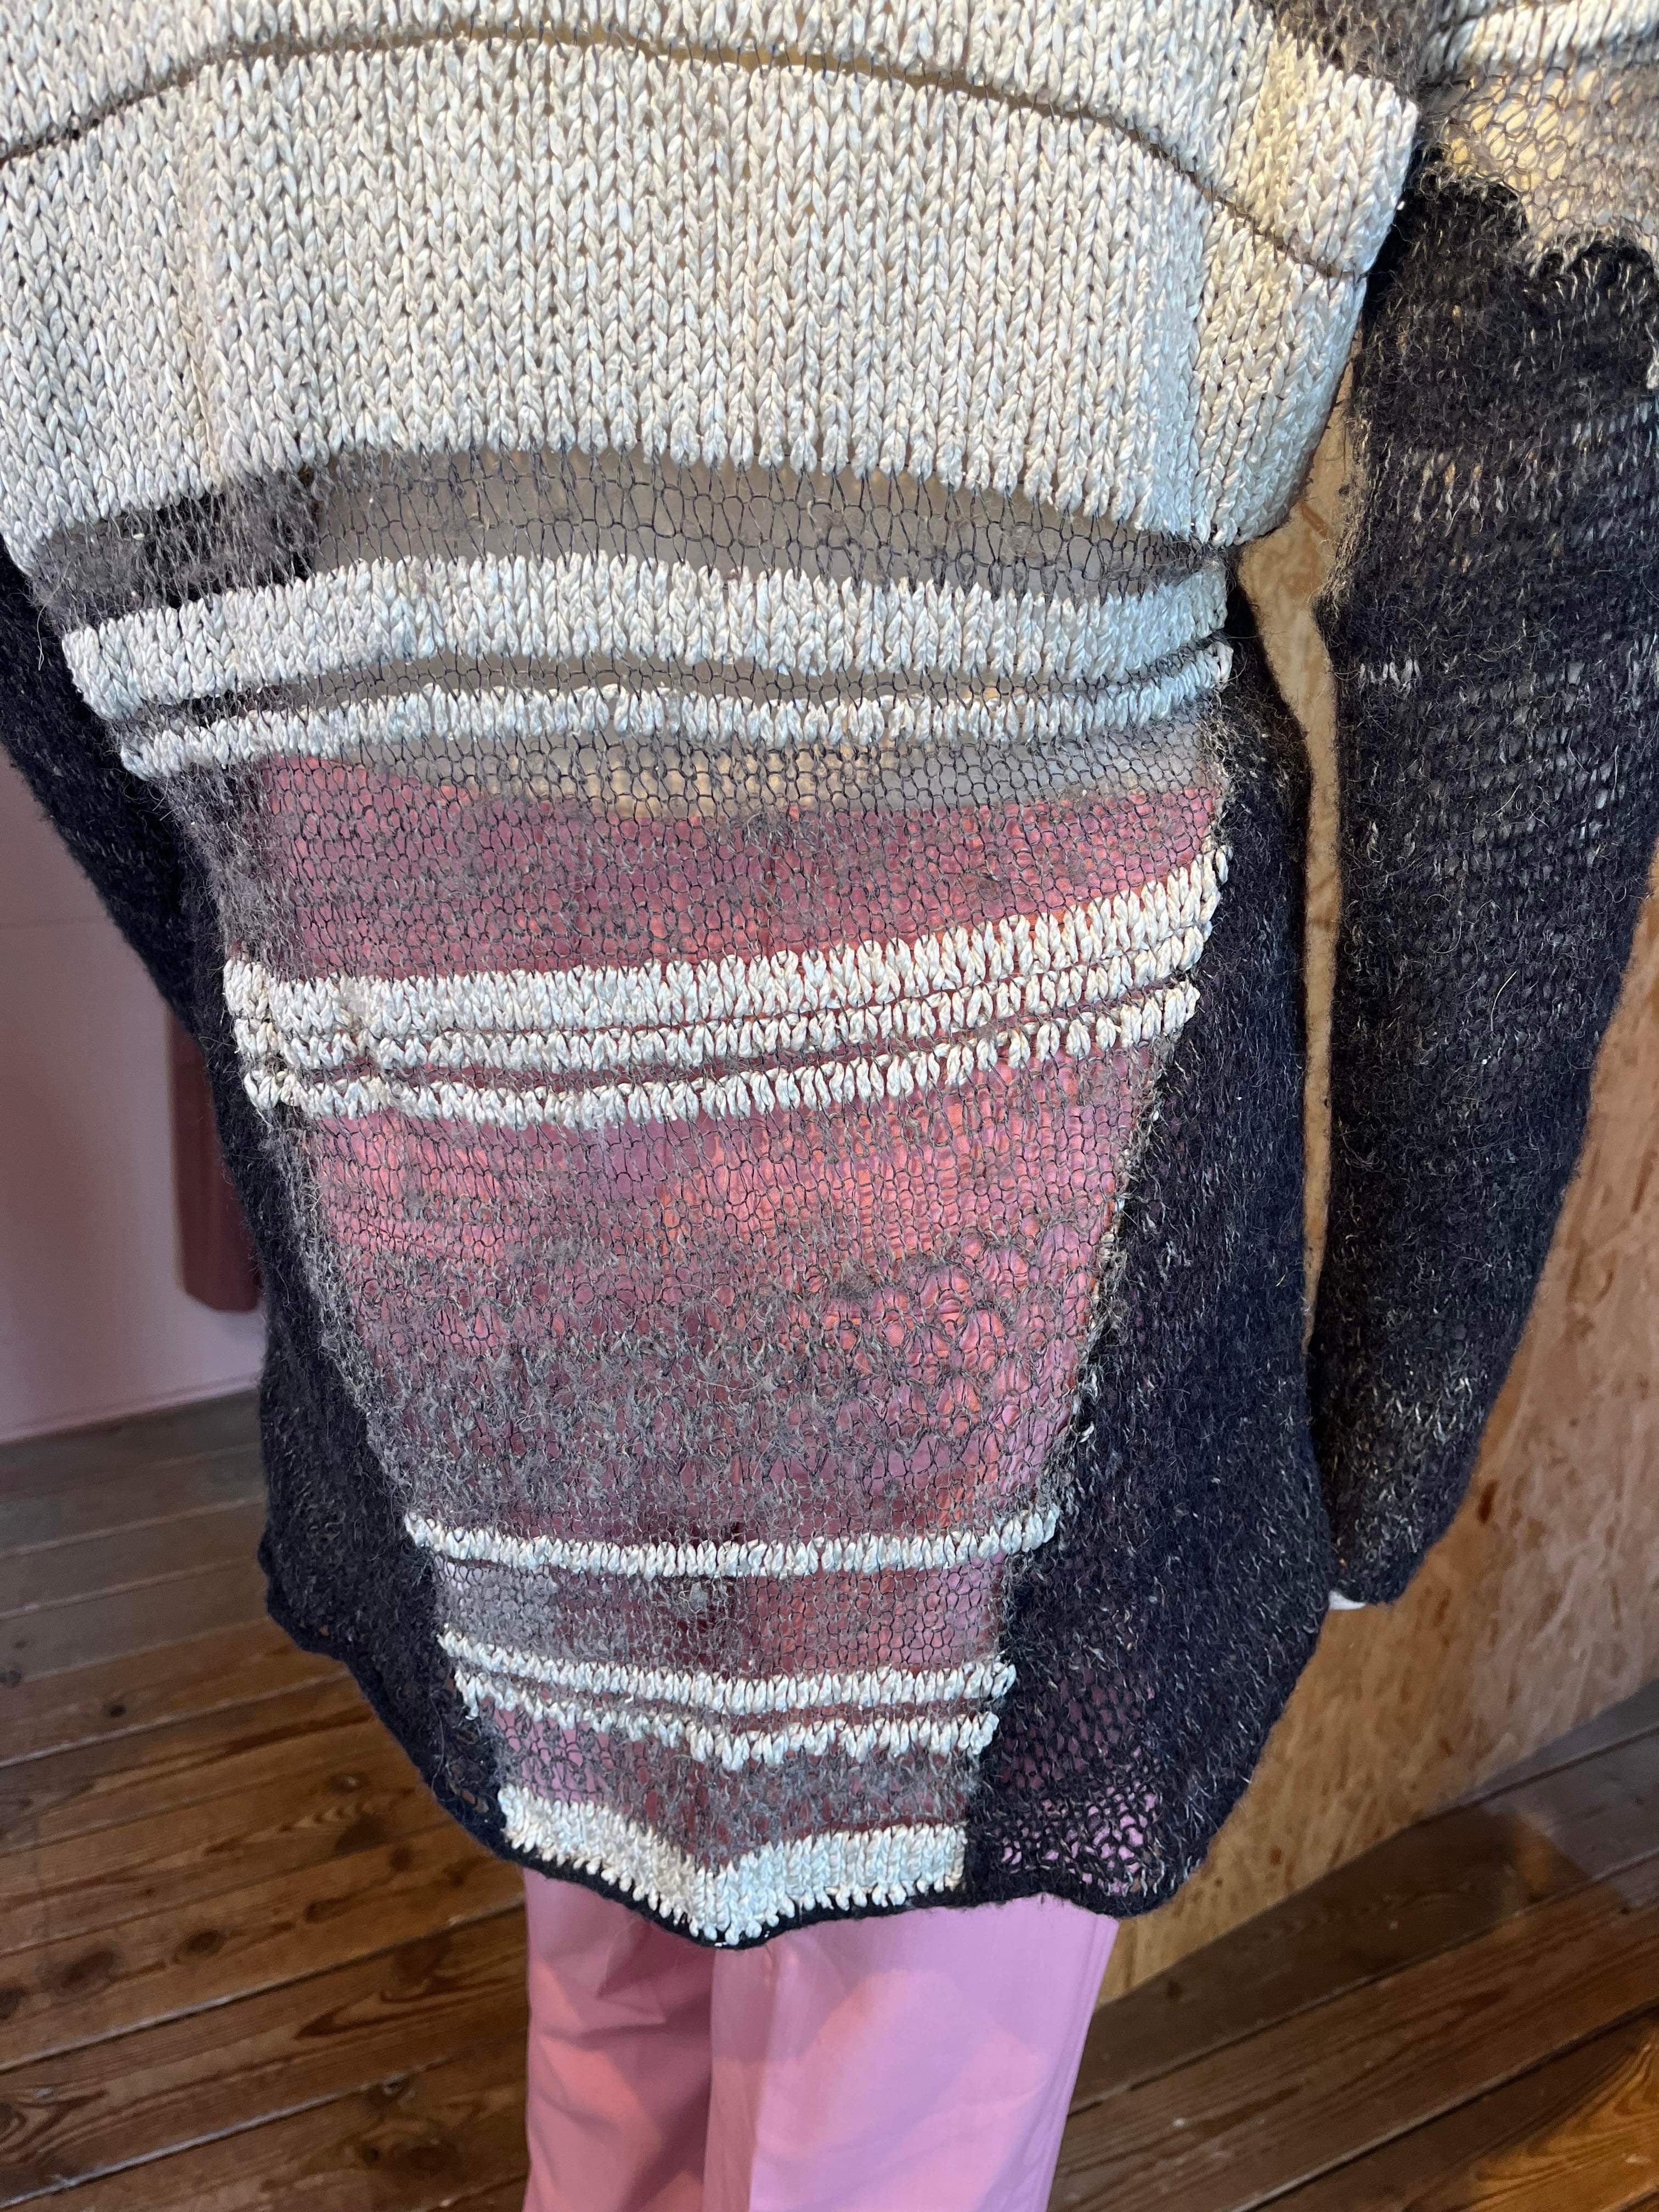 Helmut Lang - Sweater - Size: M